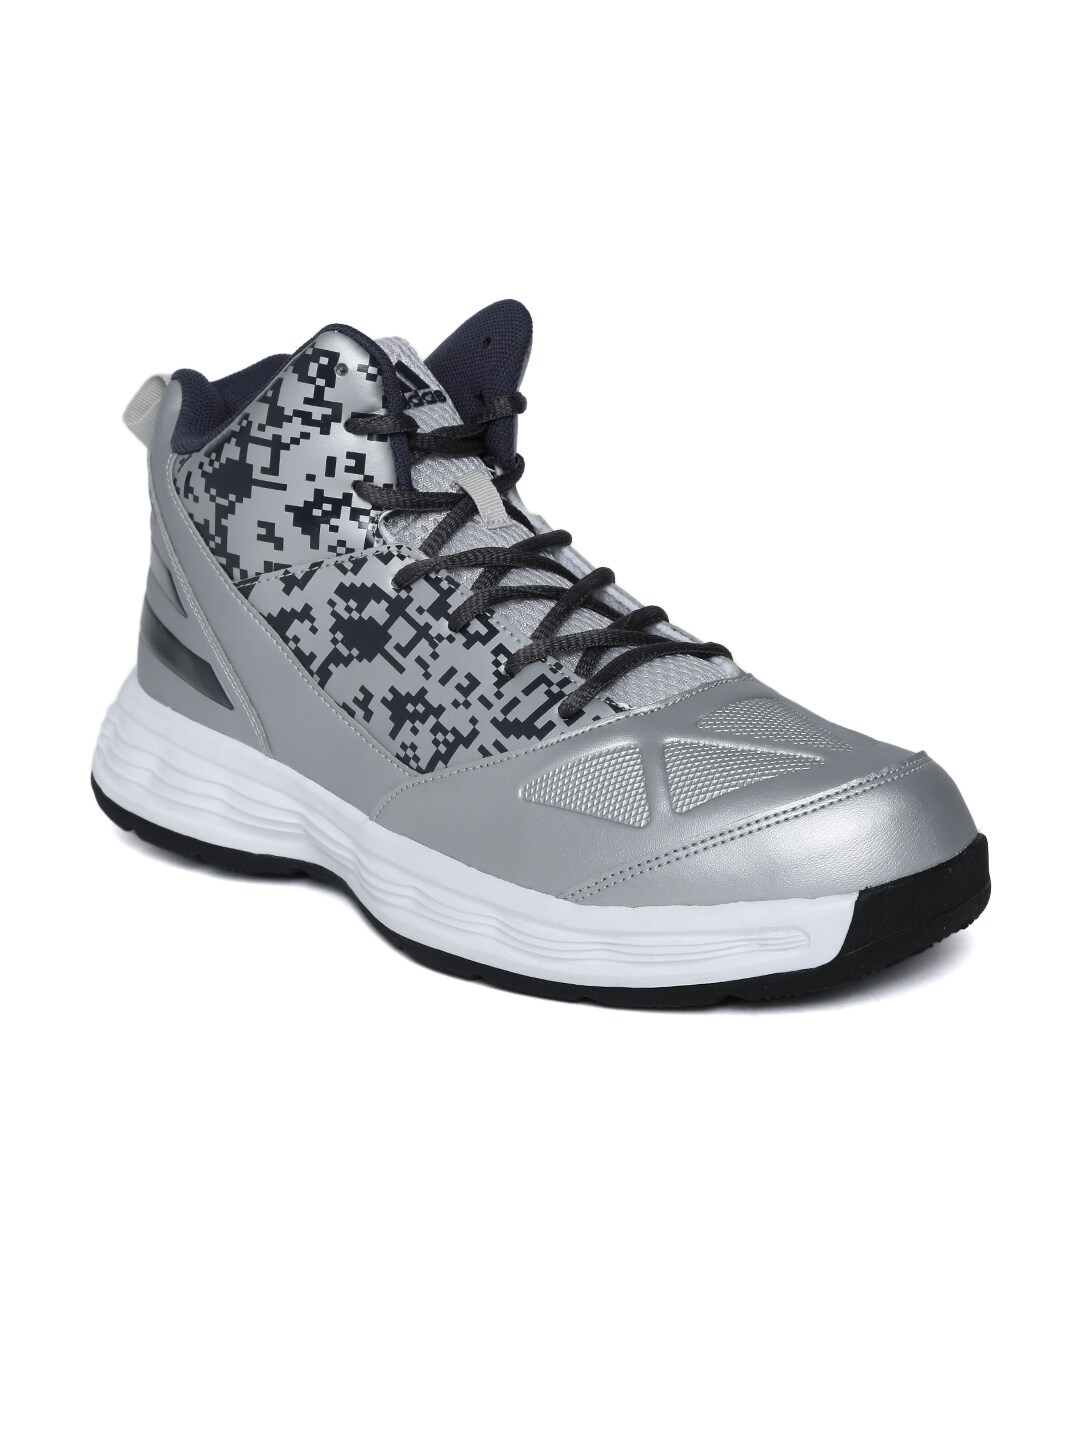 adidas gcf 1 basketball shoes